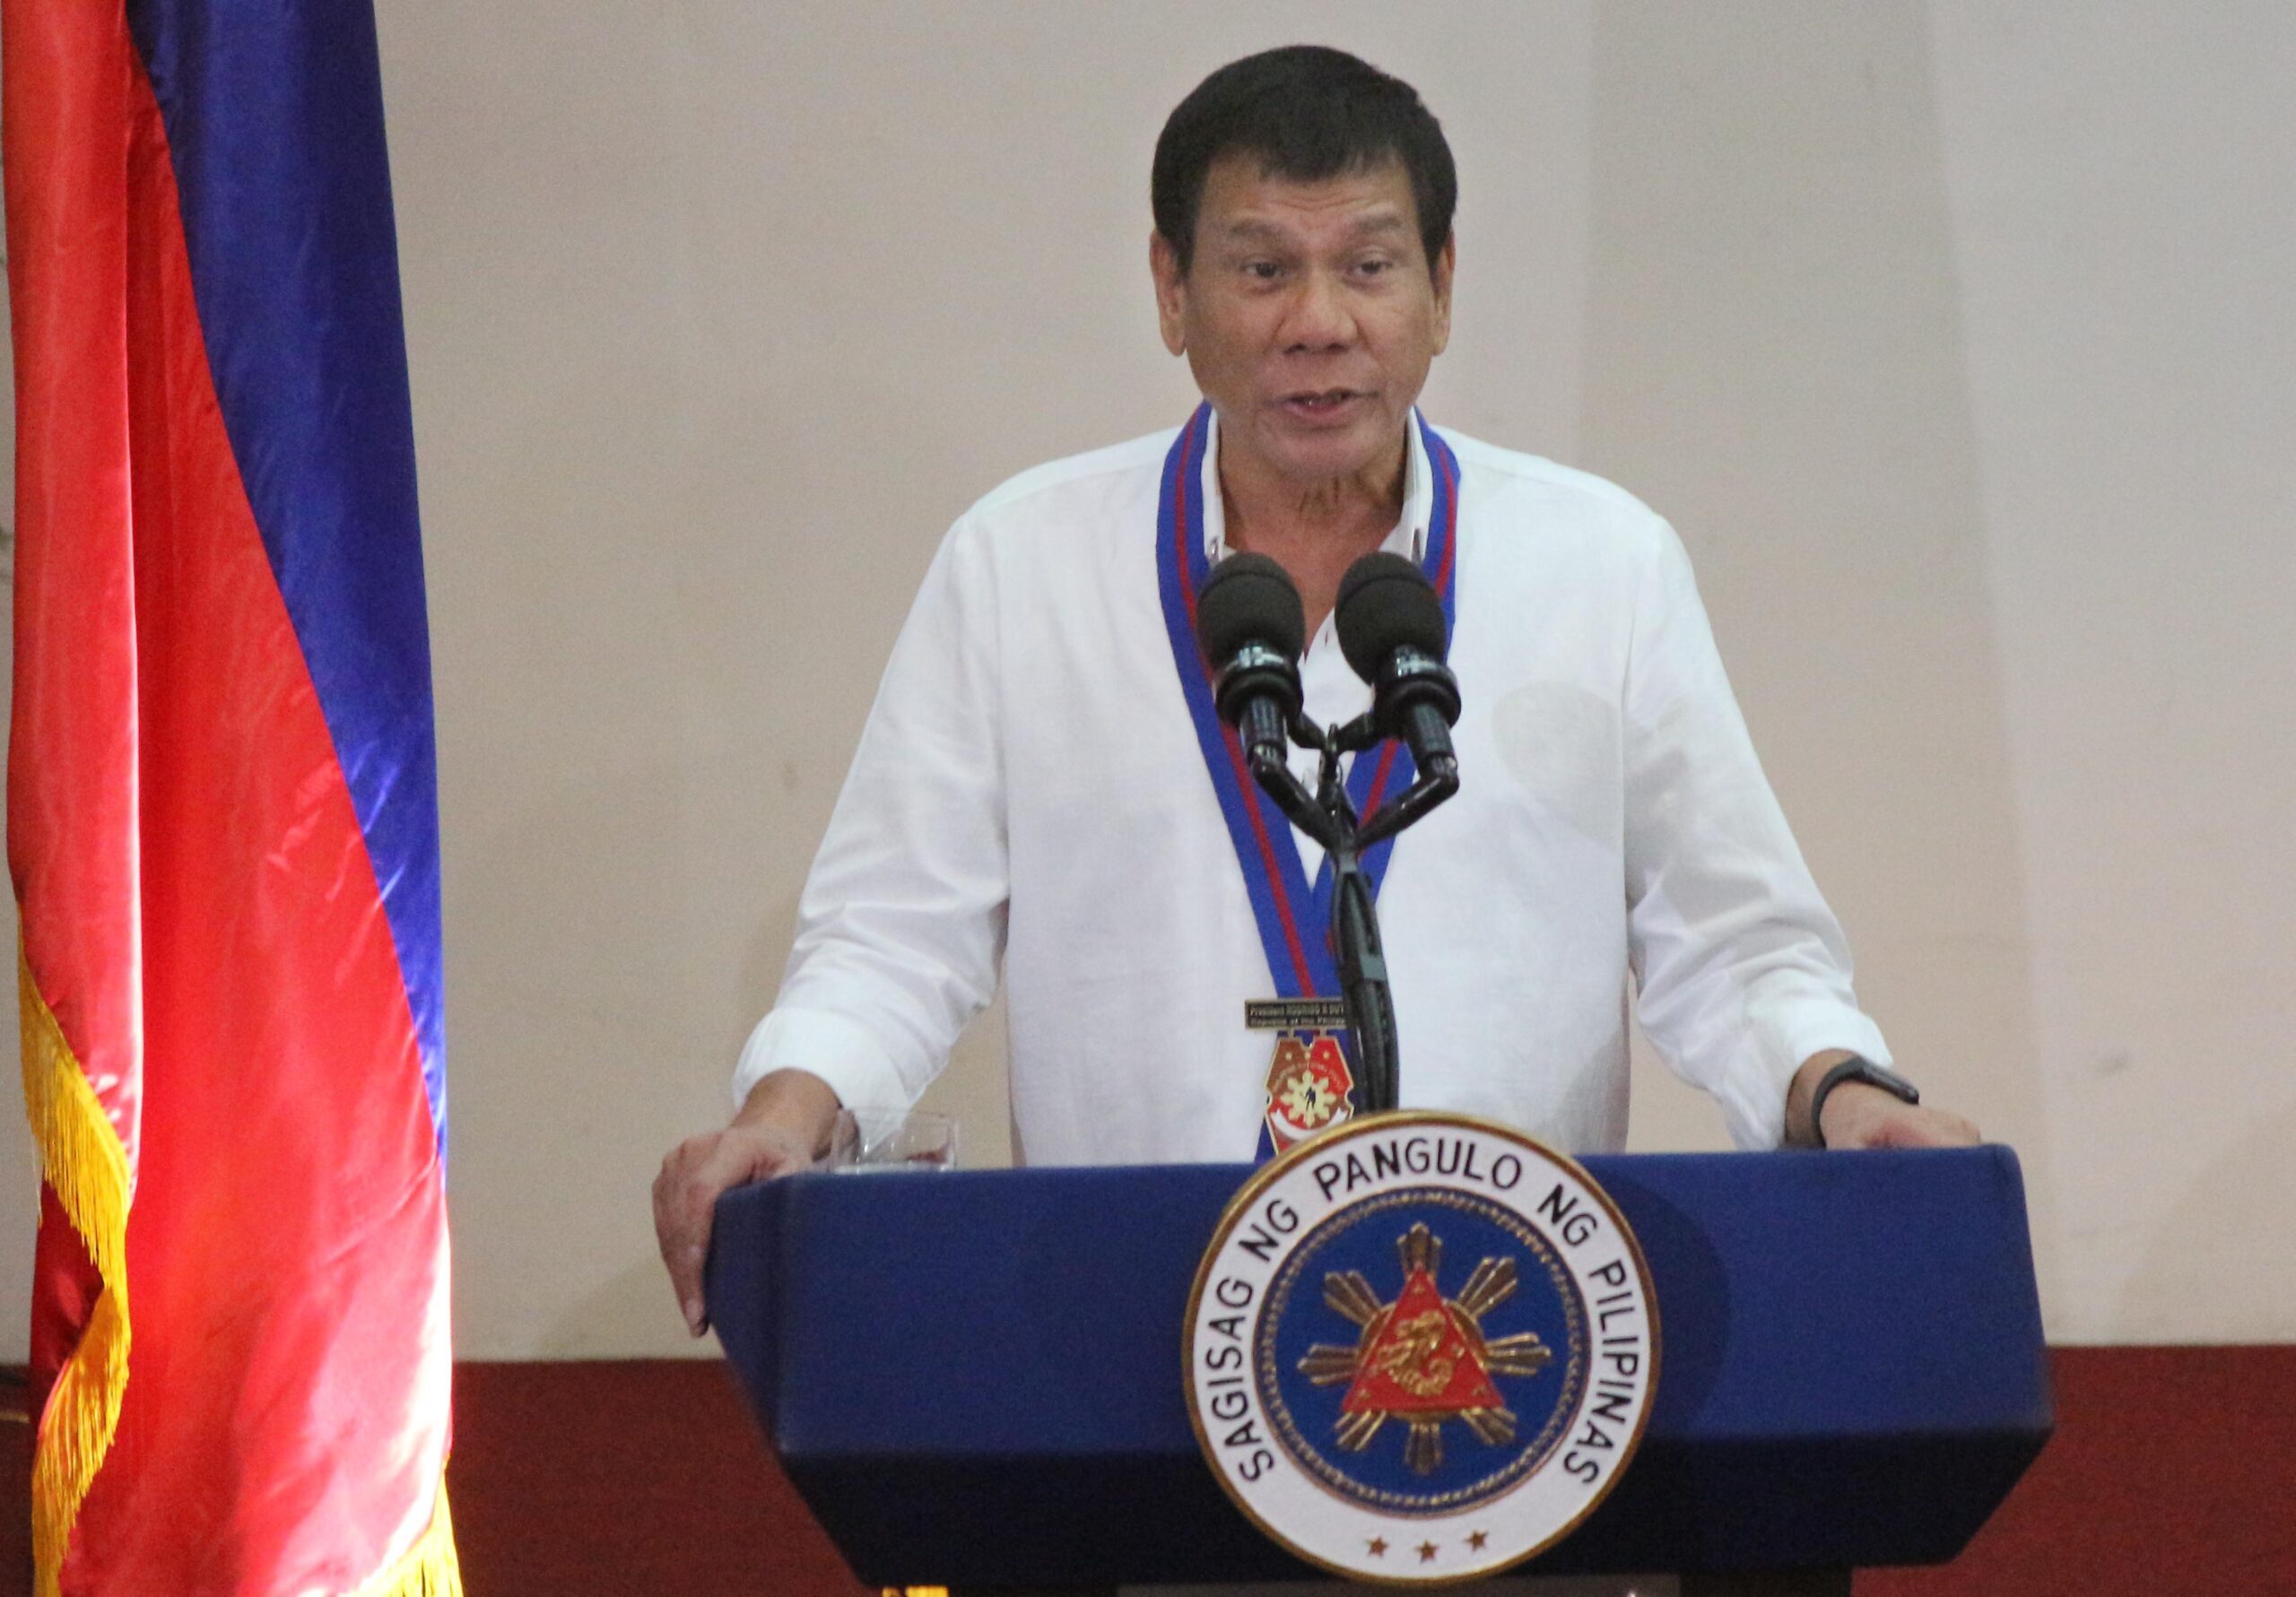 As prosecutor, Duterte says they ‘planted evidence’